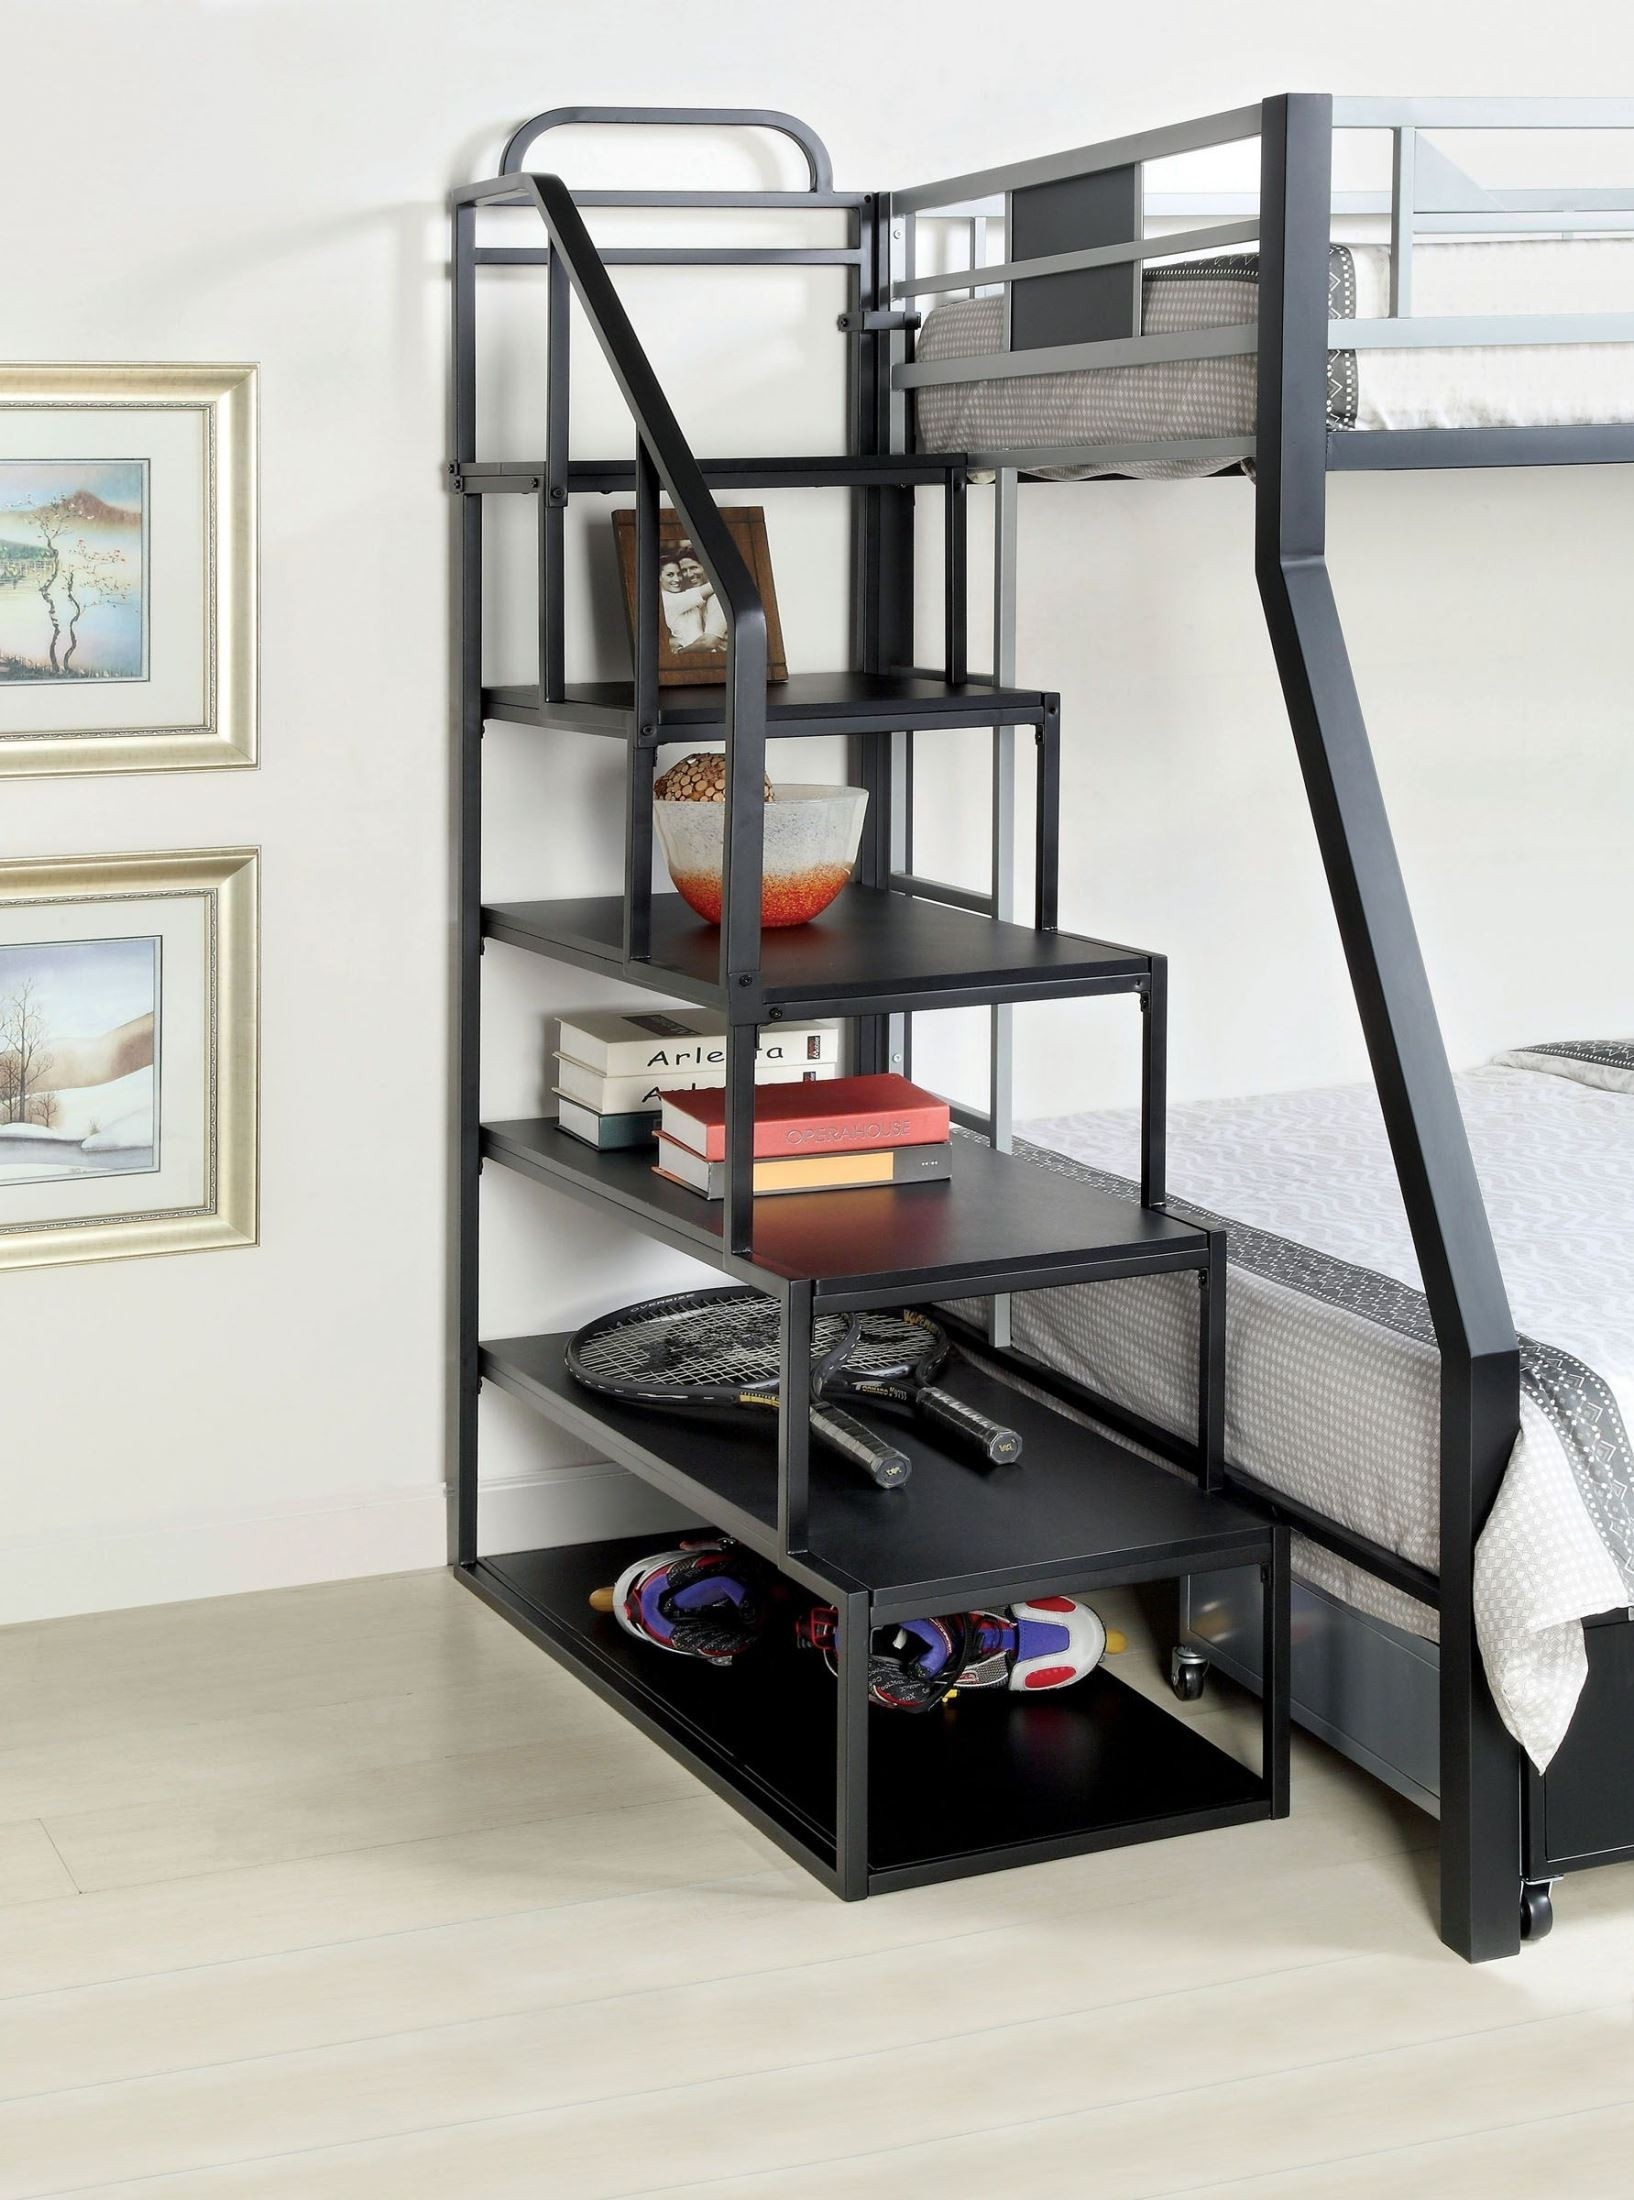 Furniture of America Metal Bunk Bed Side Ladder Bookshelf, Silver and Black Finish